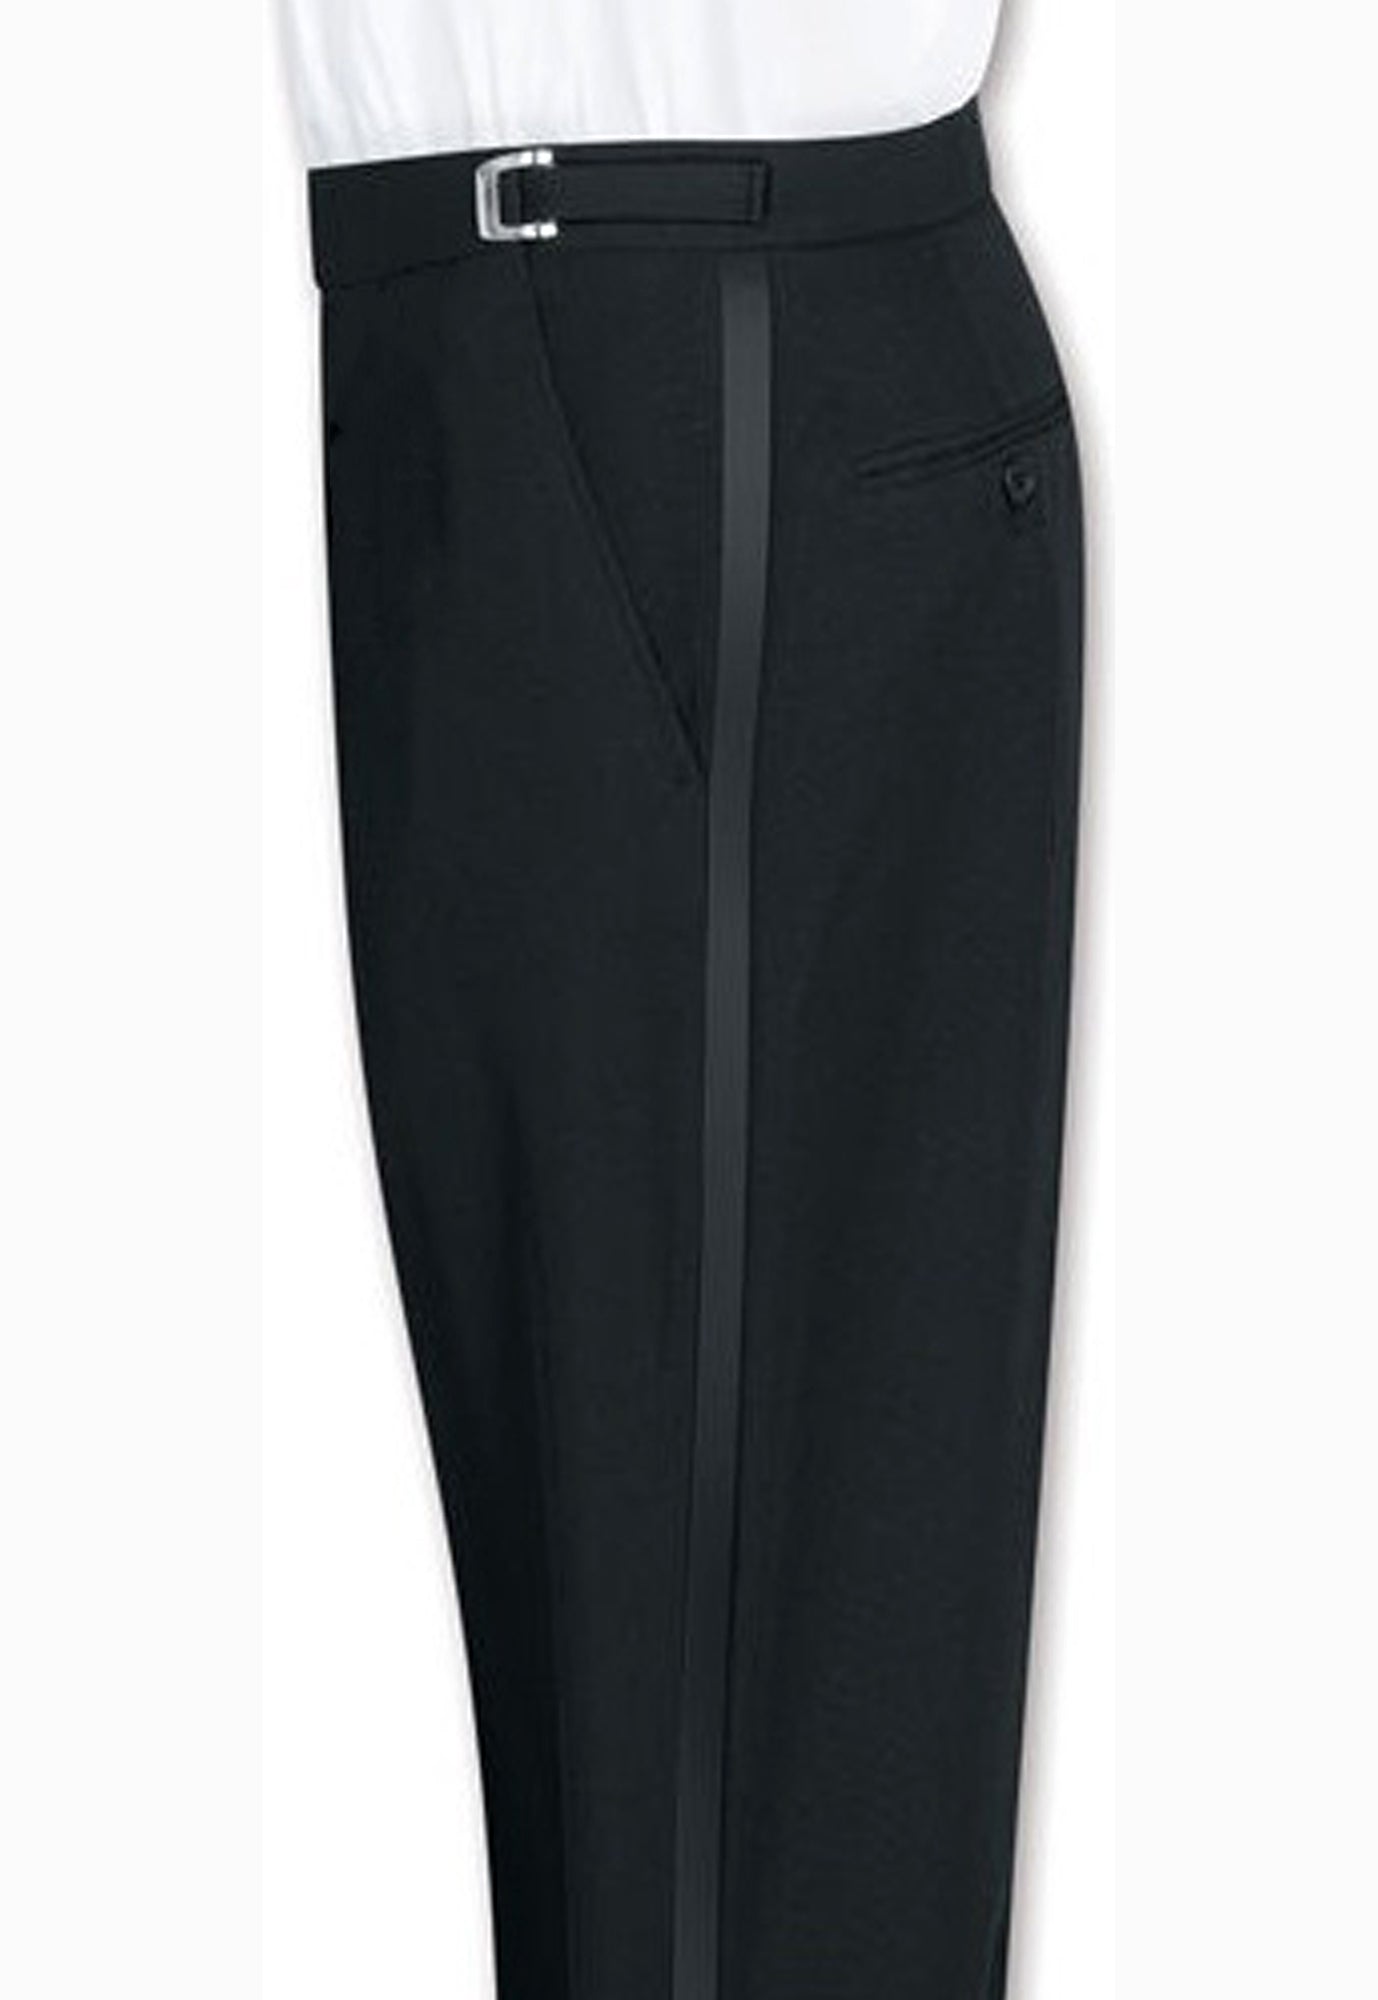 TOM FORD Men's O'Connor Wool Tuxedo Pants - Bergdorf Goodman